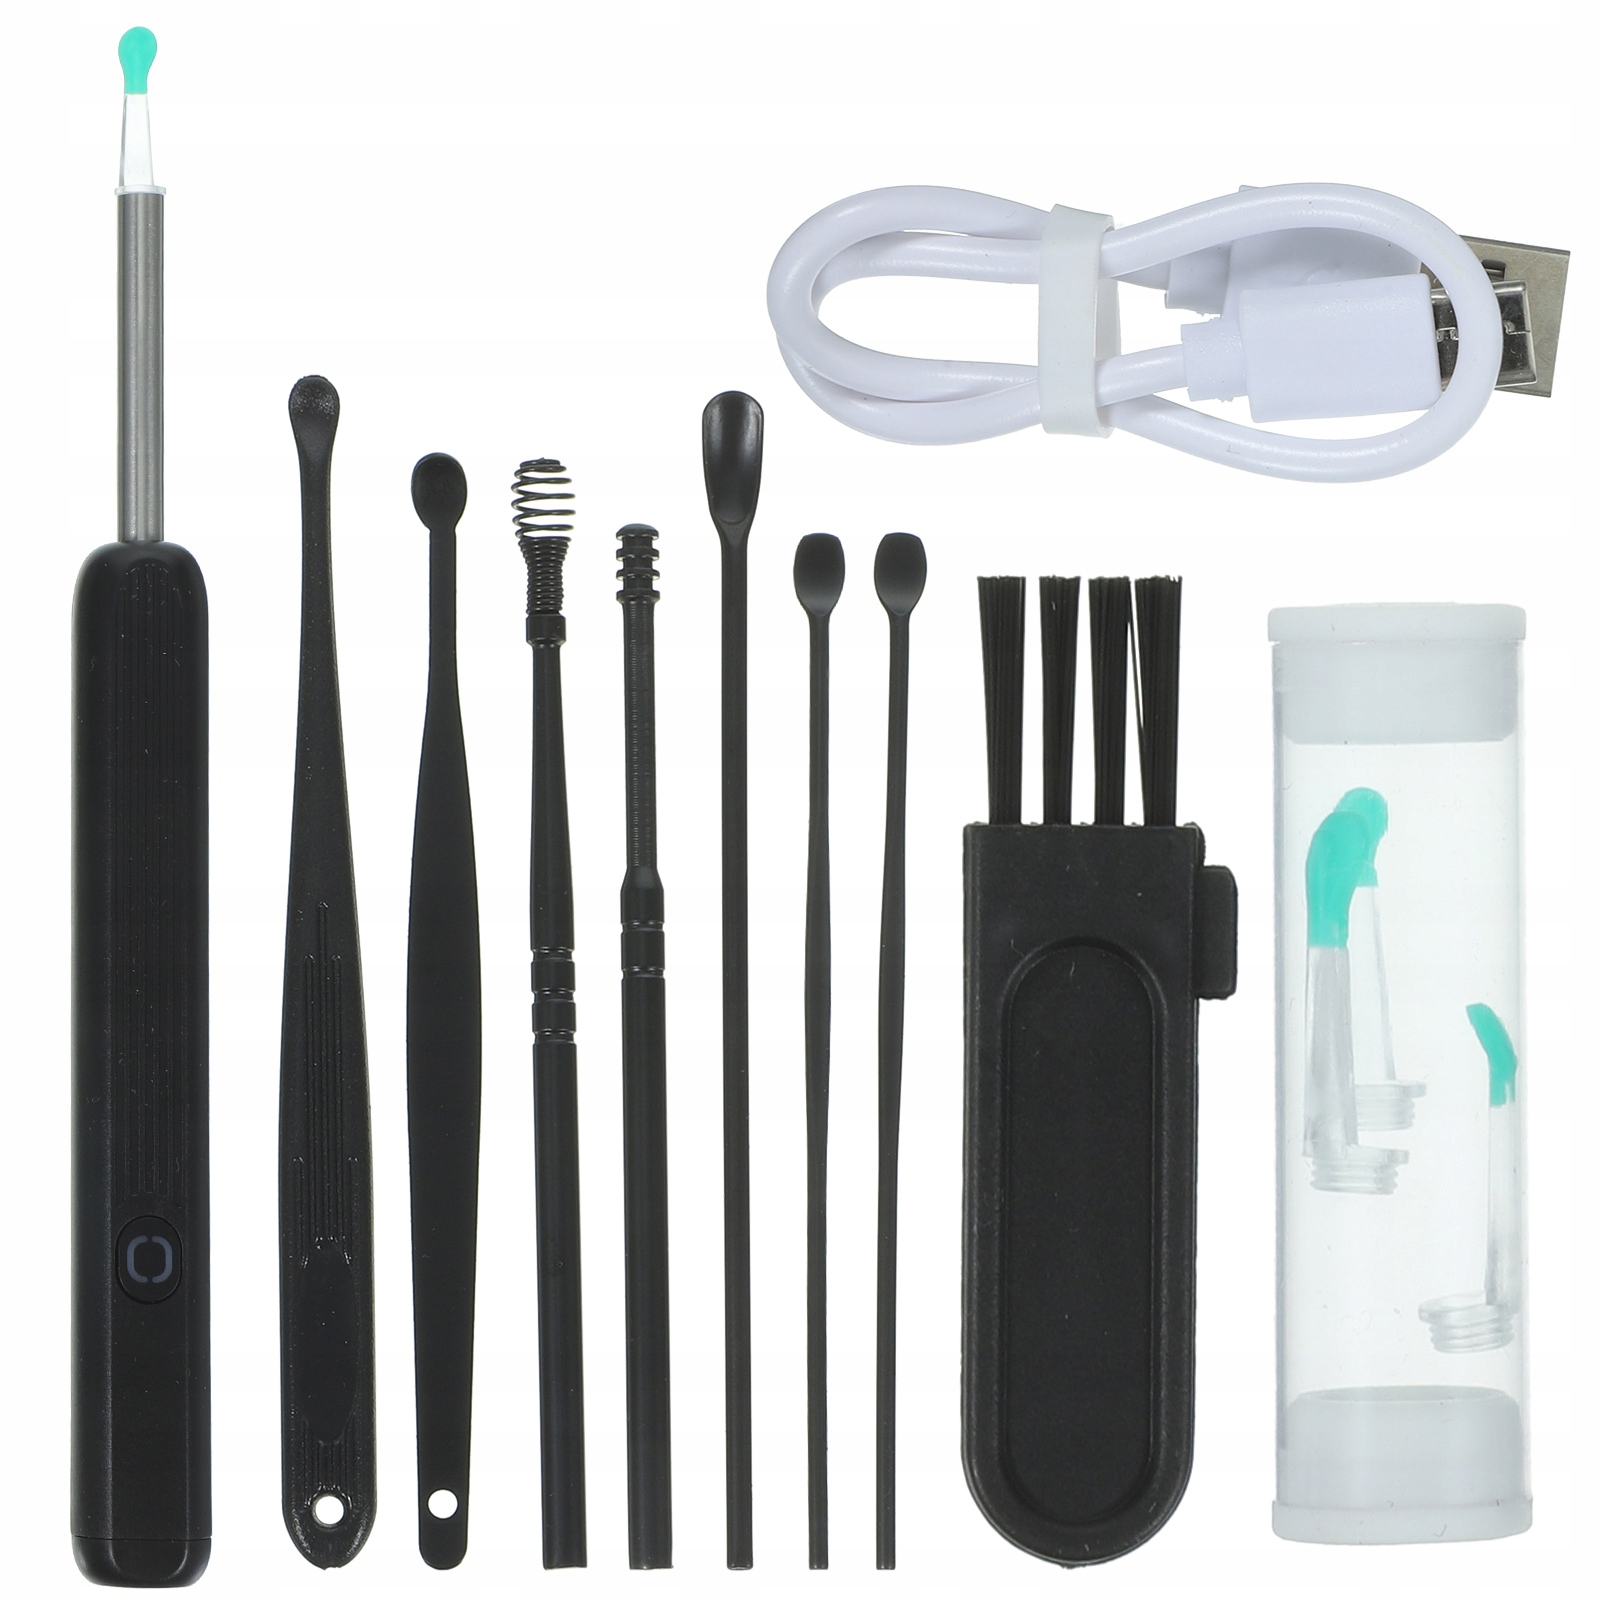 Bebird® T15 Ear Camera Cleaner, Squeeze Acne Tool, Blackhead Remover –  Earokay